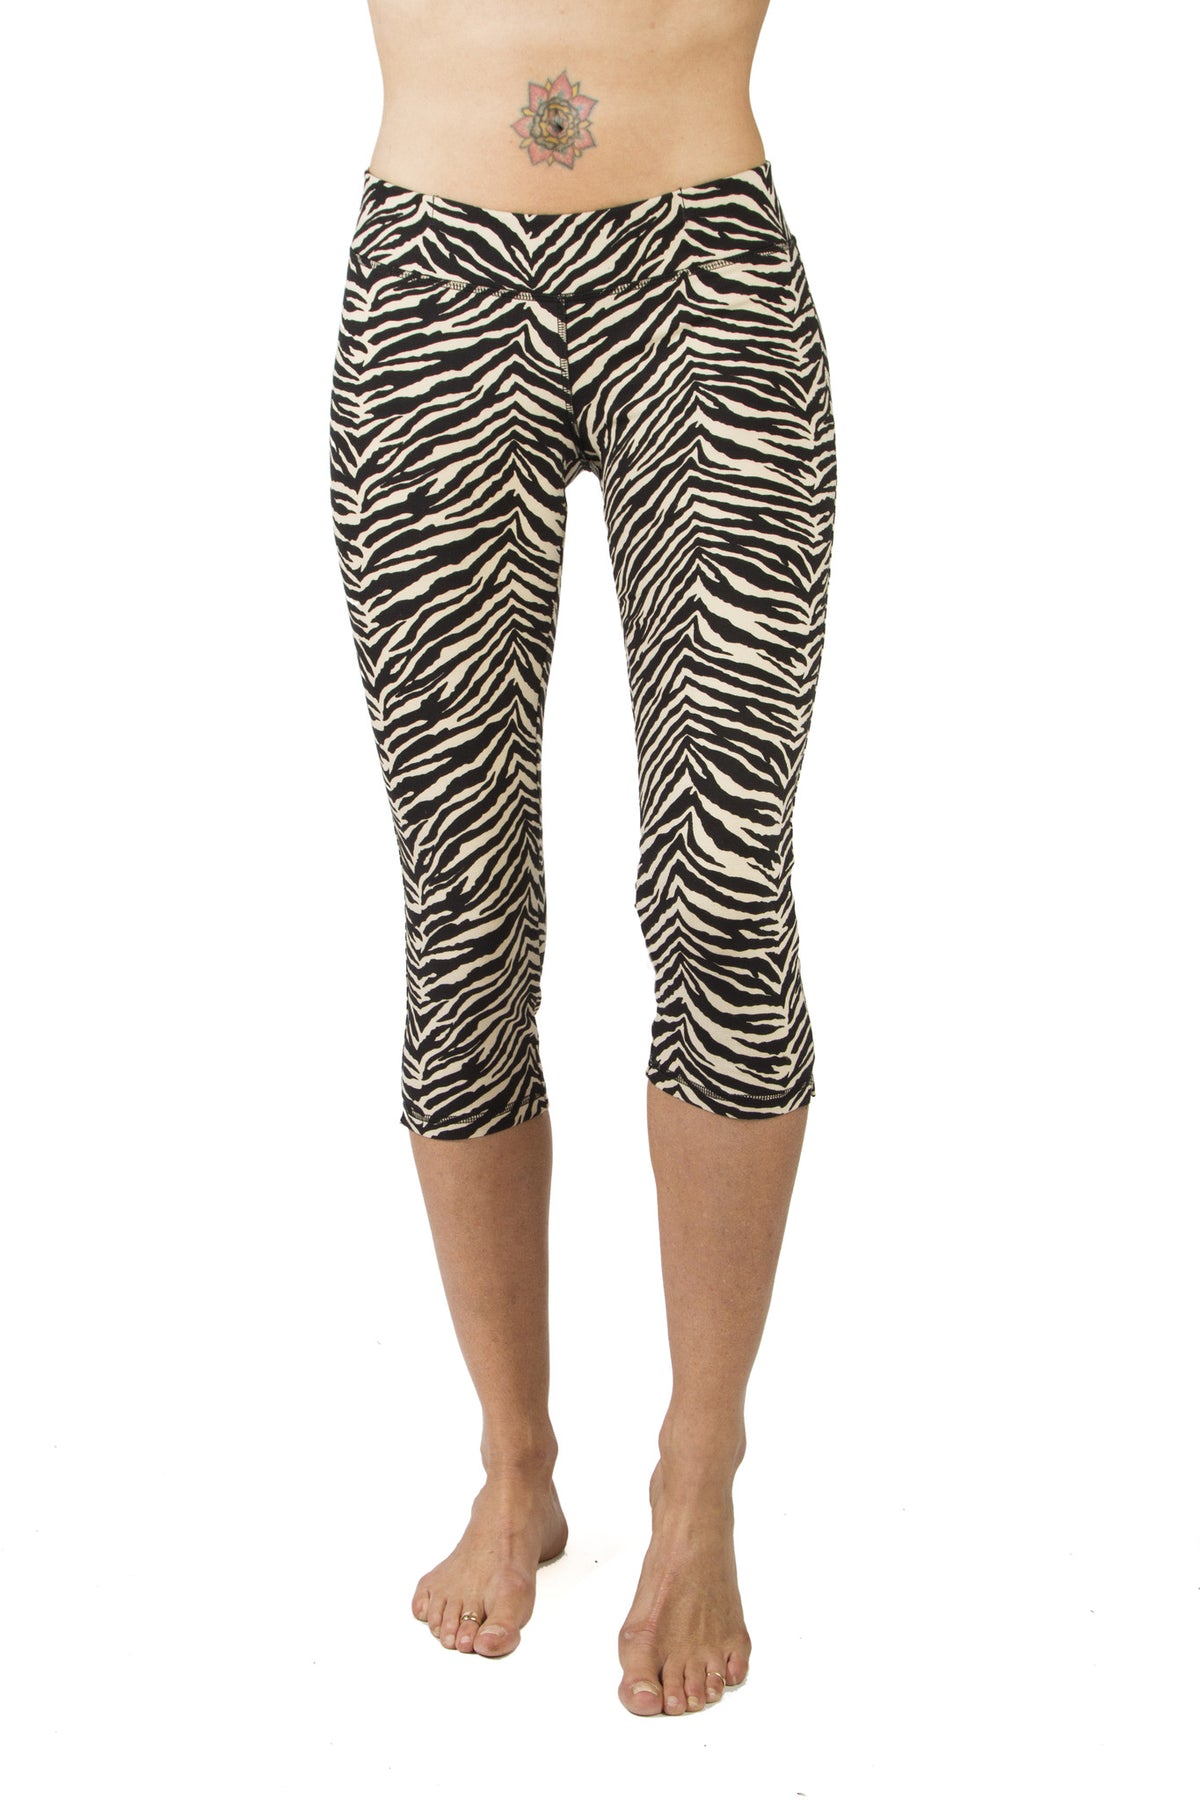 Capri Tights - Zebra Cream Black – FUNKY SIMPLICITY